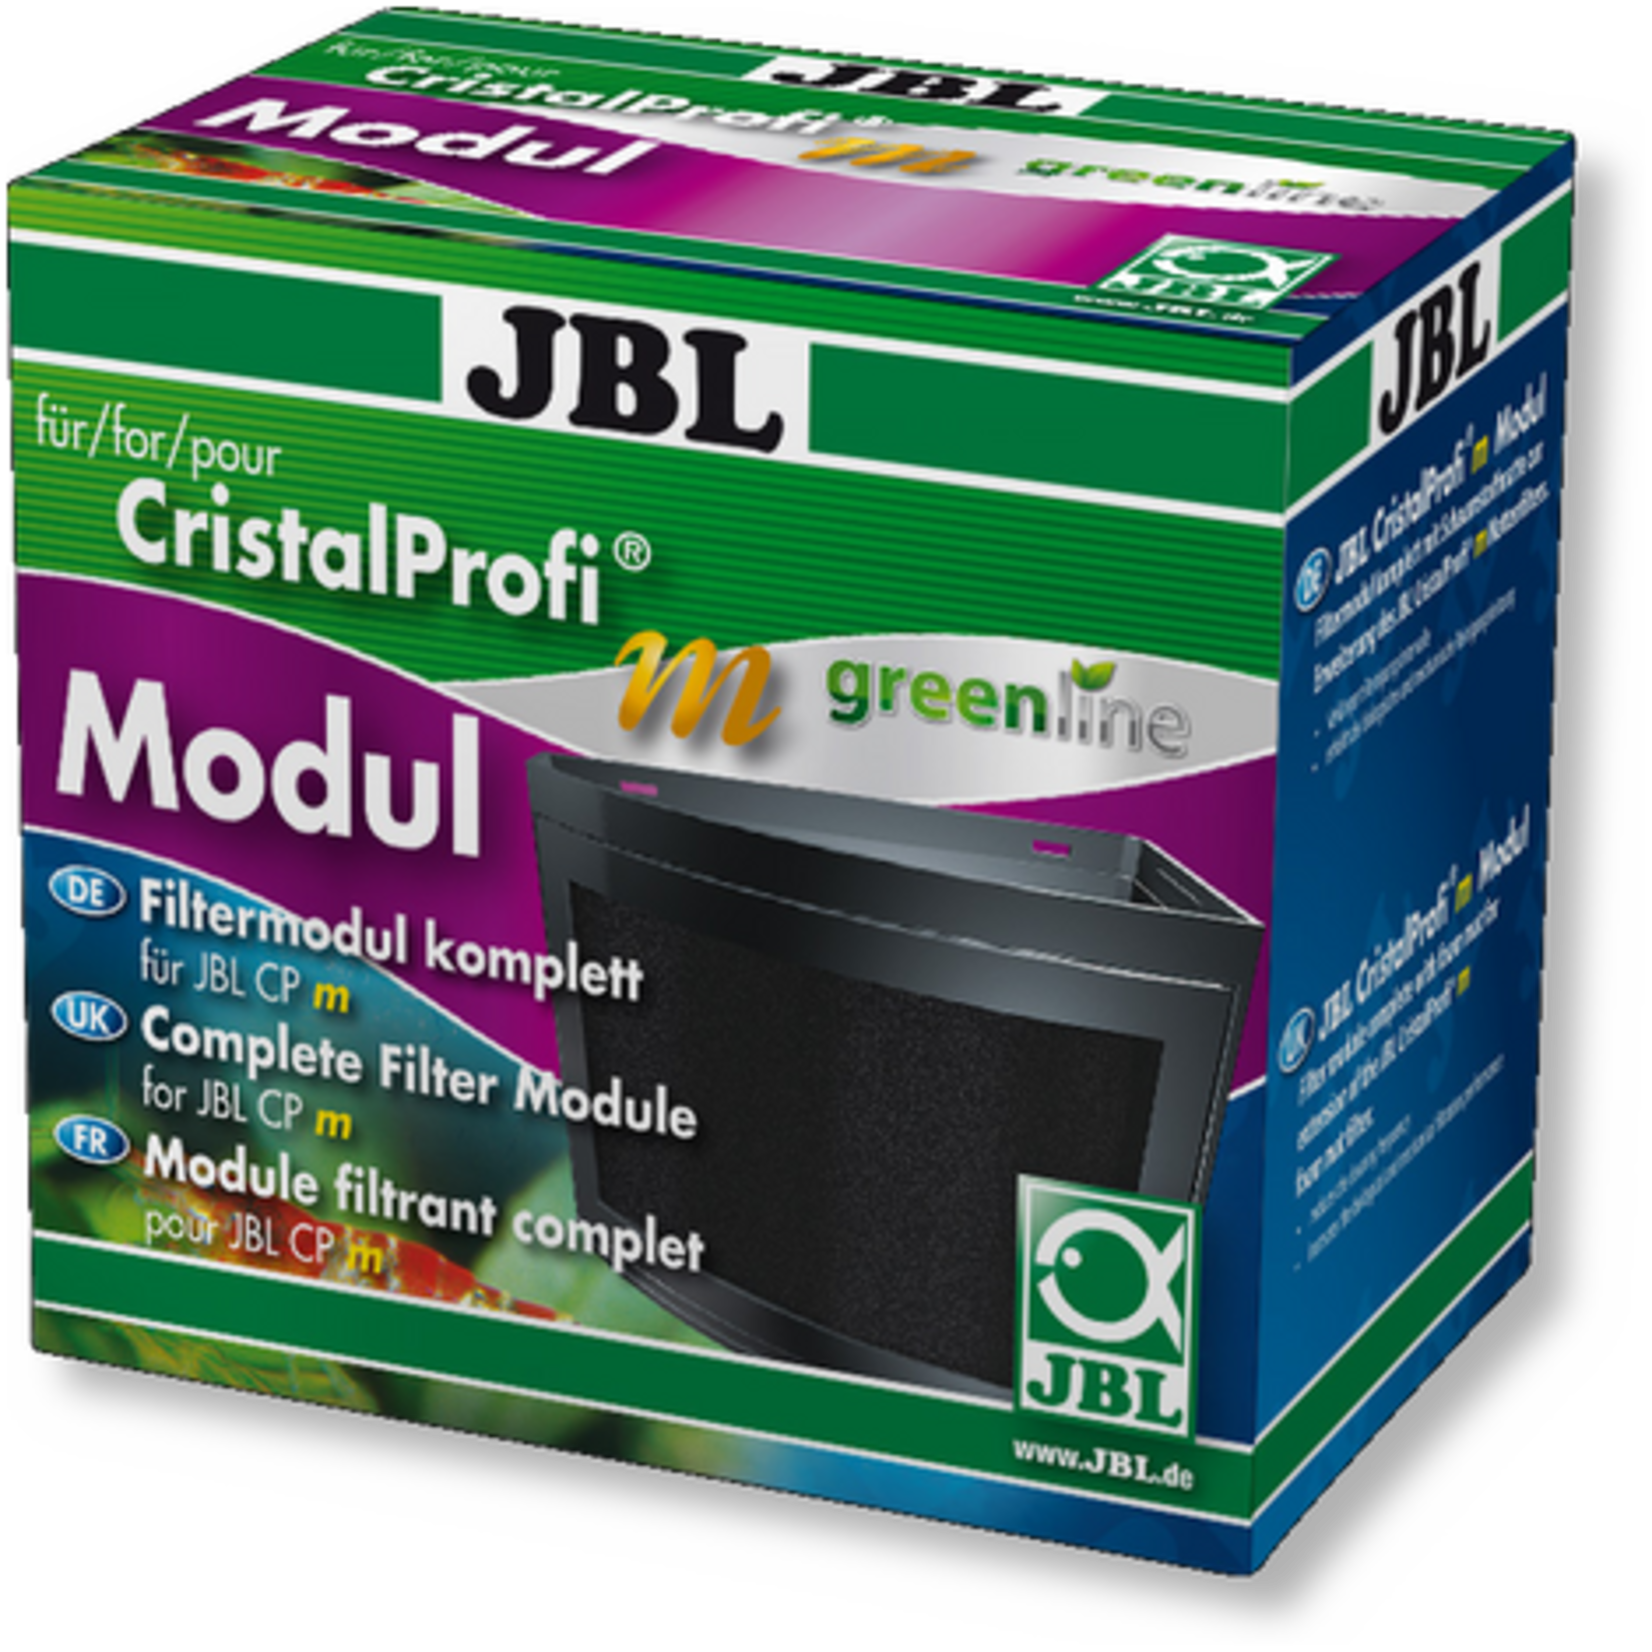 JBL Cristalprofi m GreenLine module